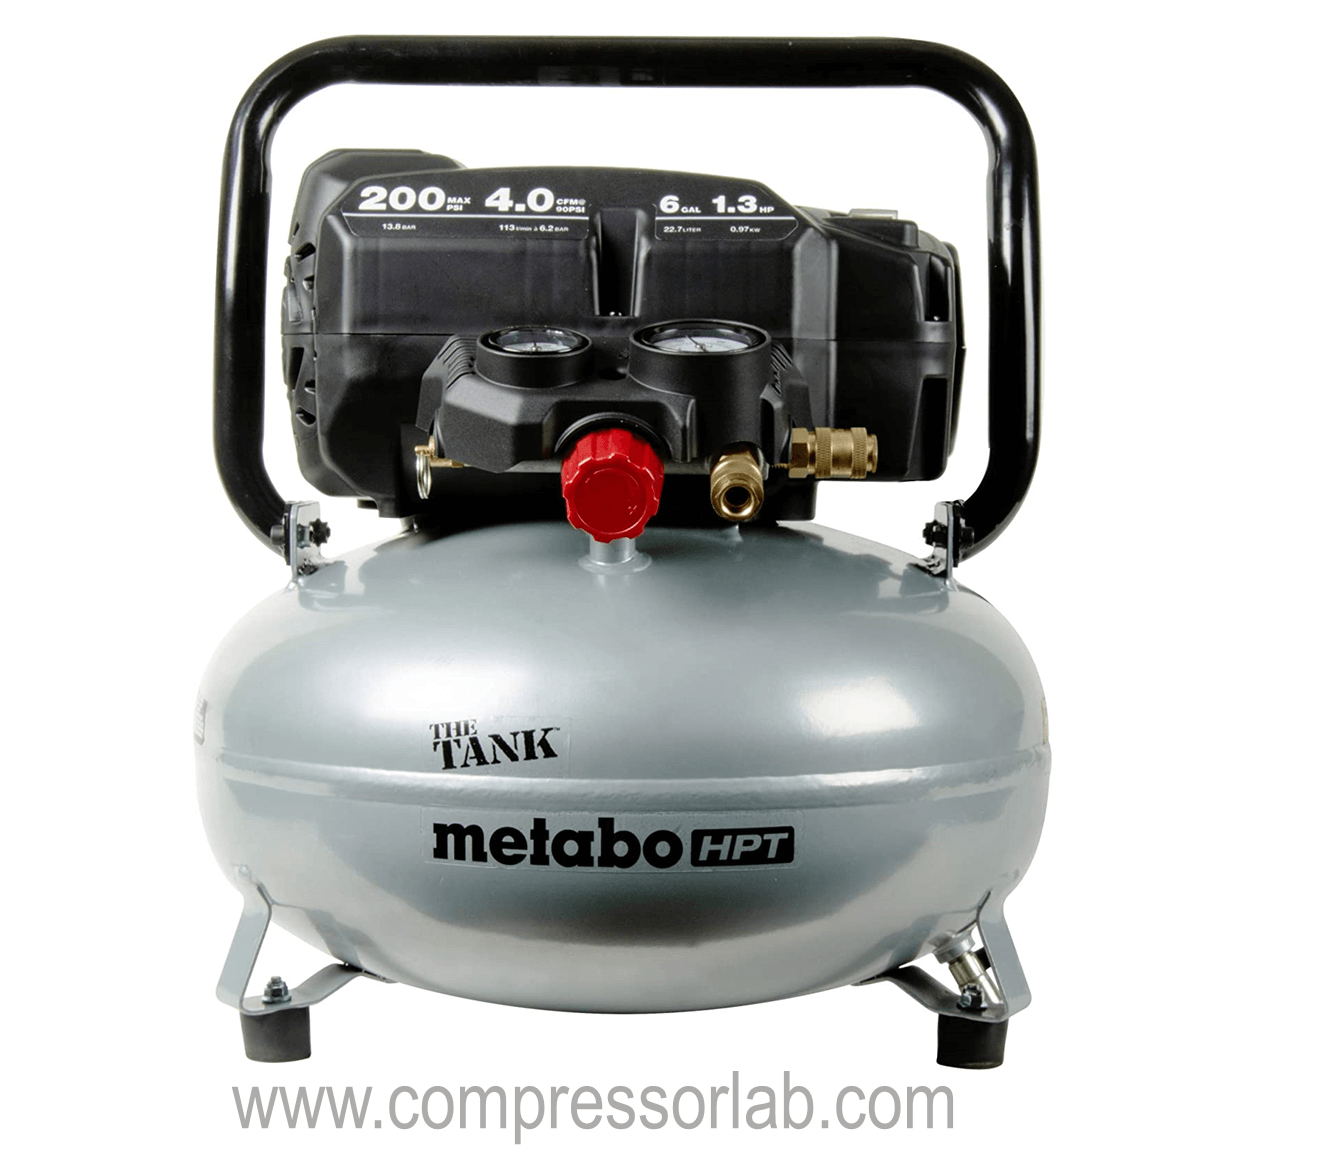 Metabo HPT " THE TANK " Pancake Air Compressor